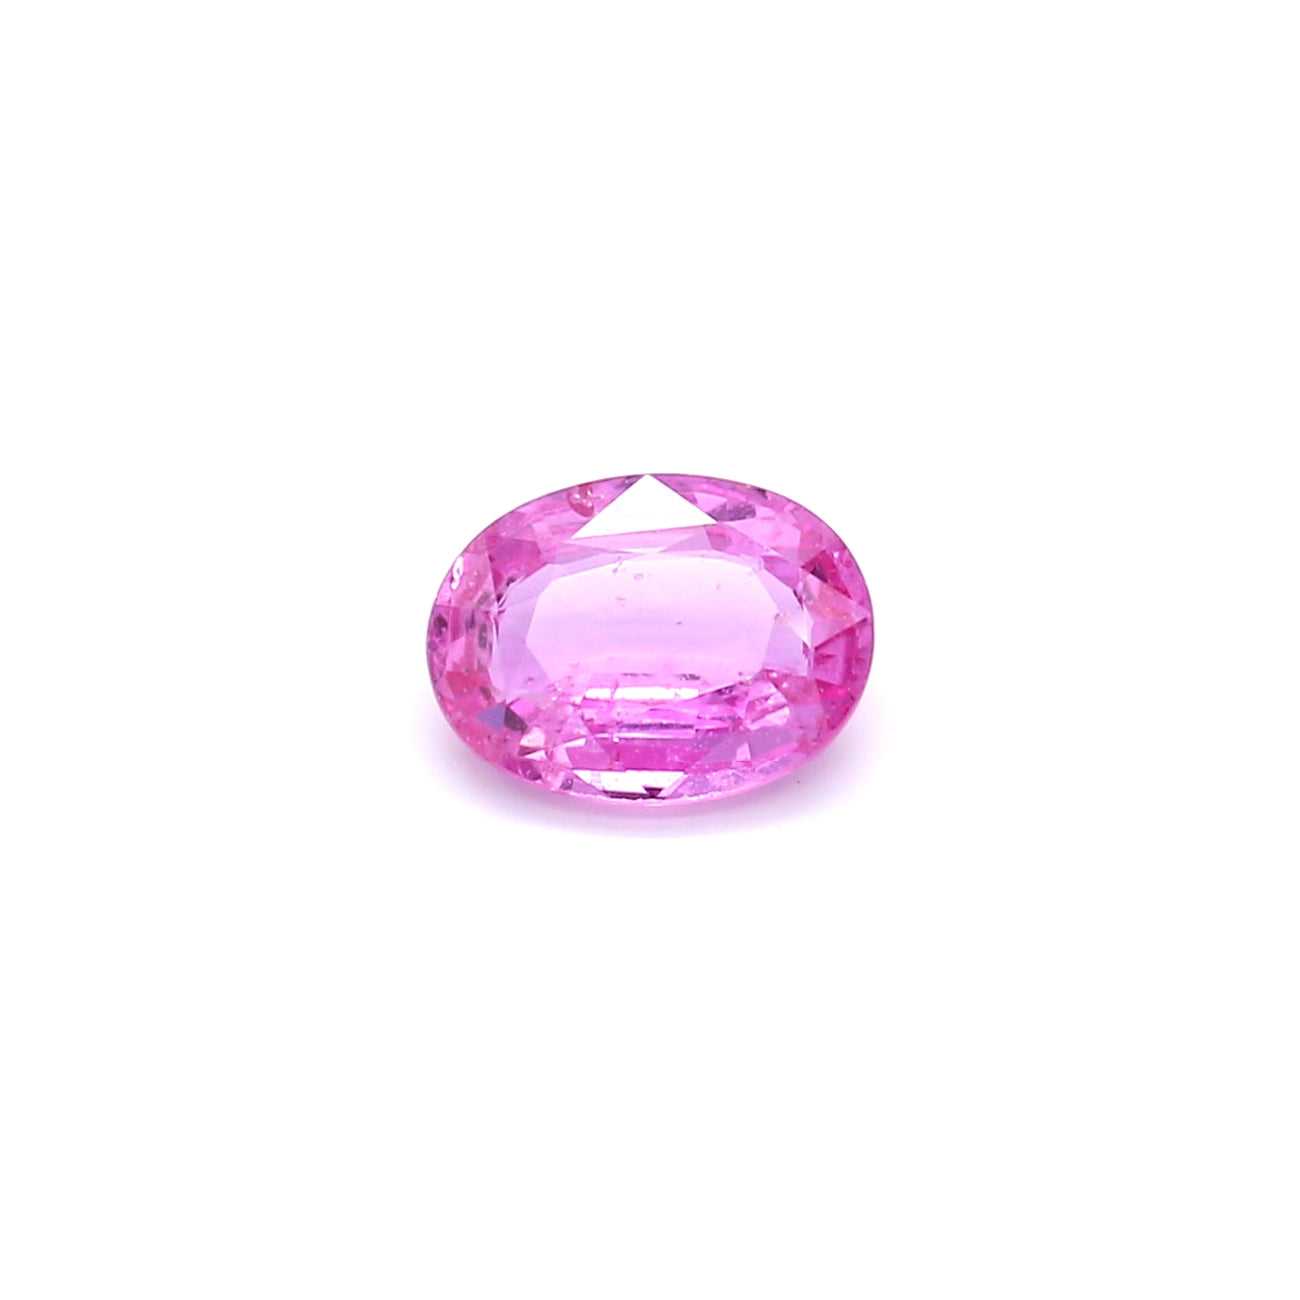 1.31ct Purplish Pink, Oval Sapphire, Heated, Madagascar - 7.90 x 5.97 x 2.81mm